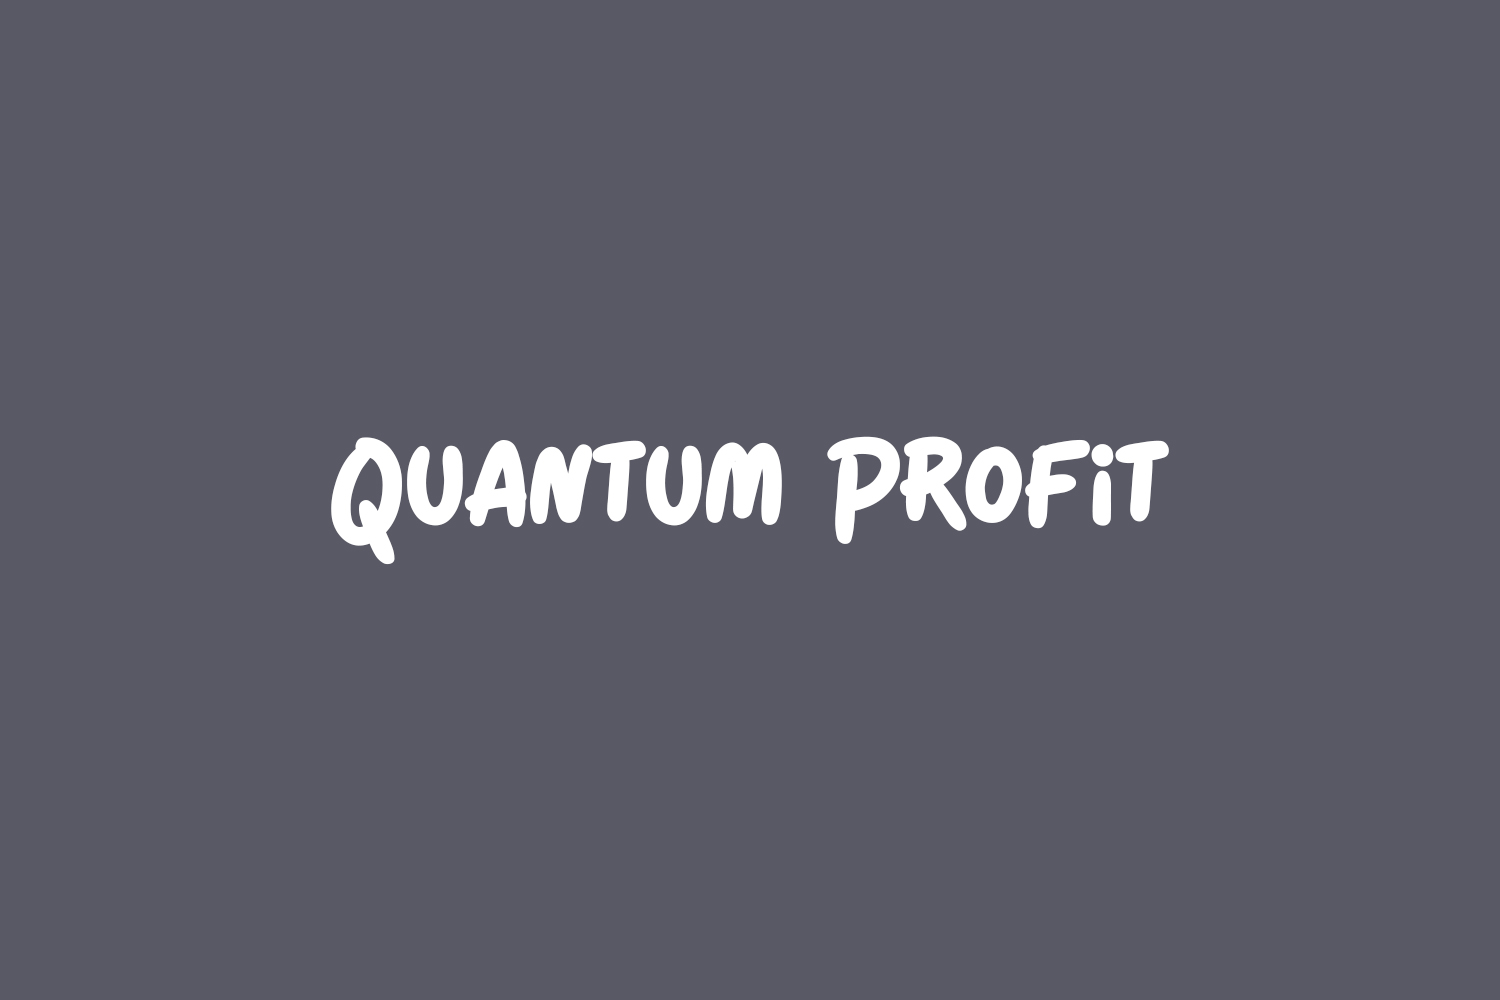 Quantum Profit Free Font